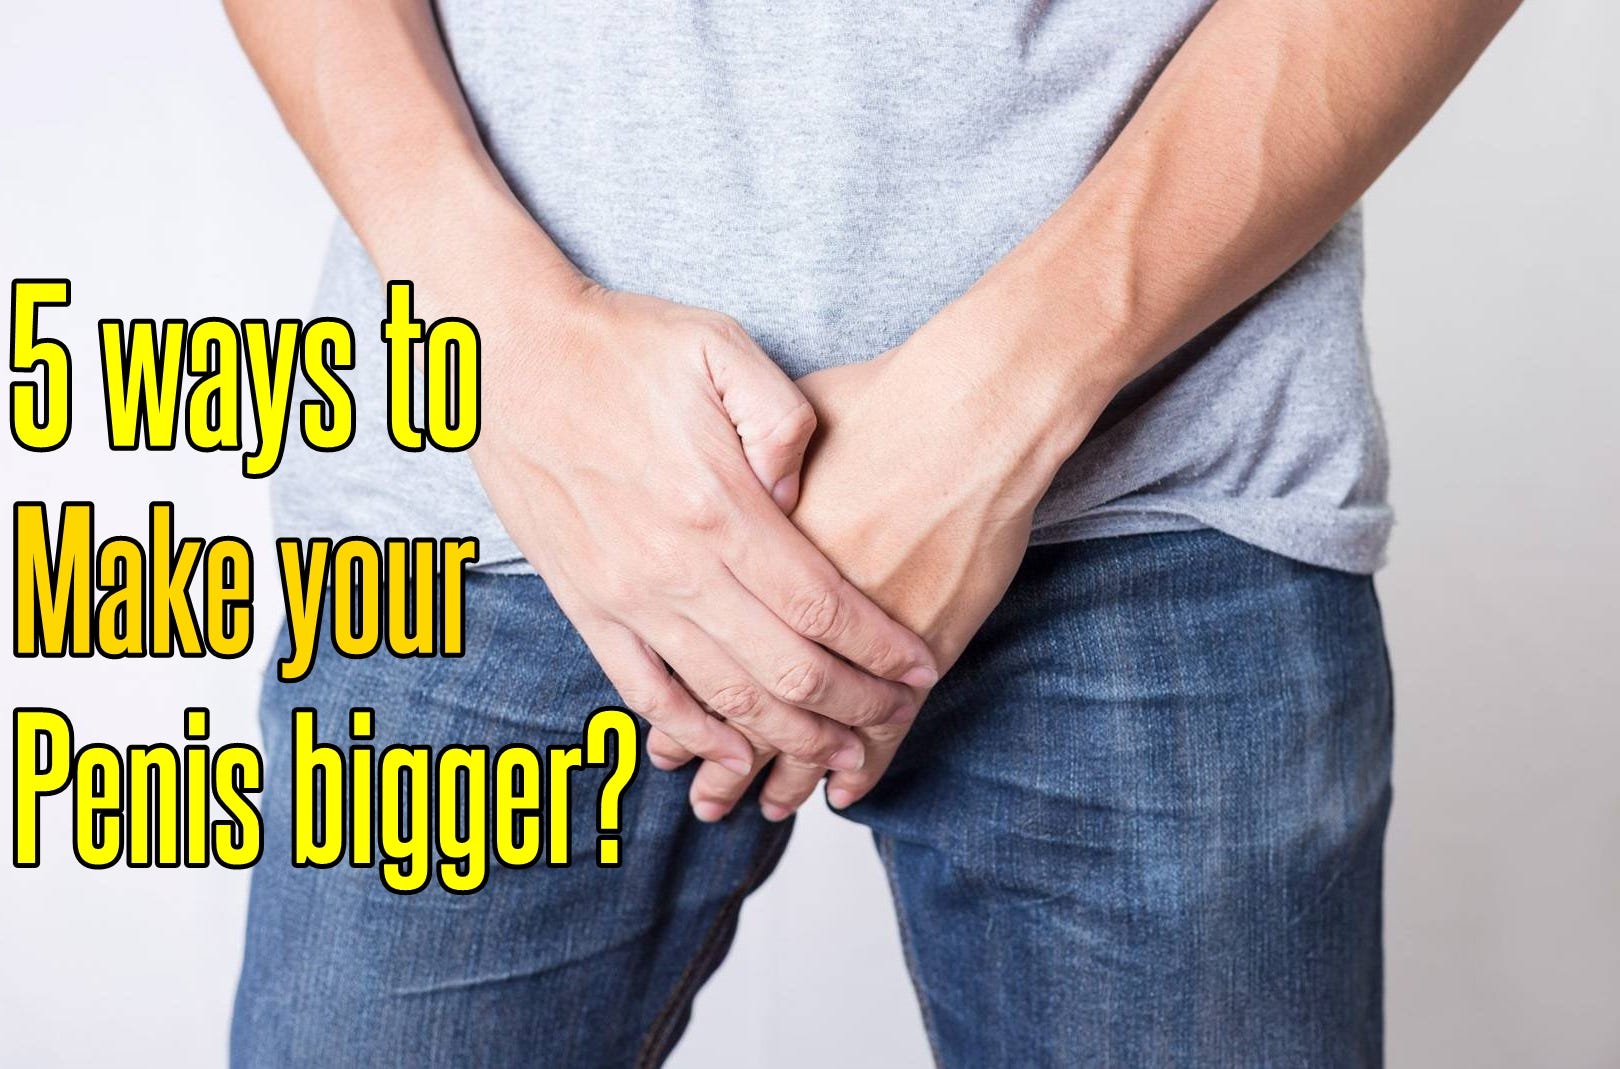 5 ways to make your dick bigger